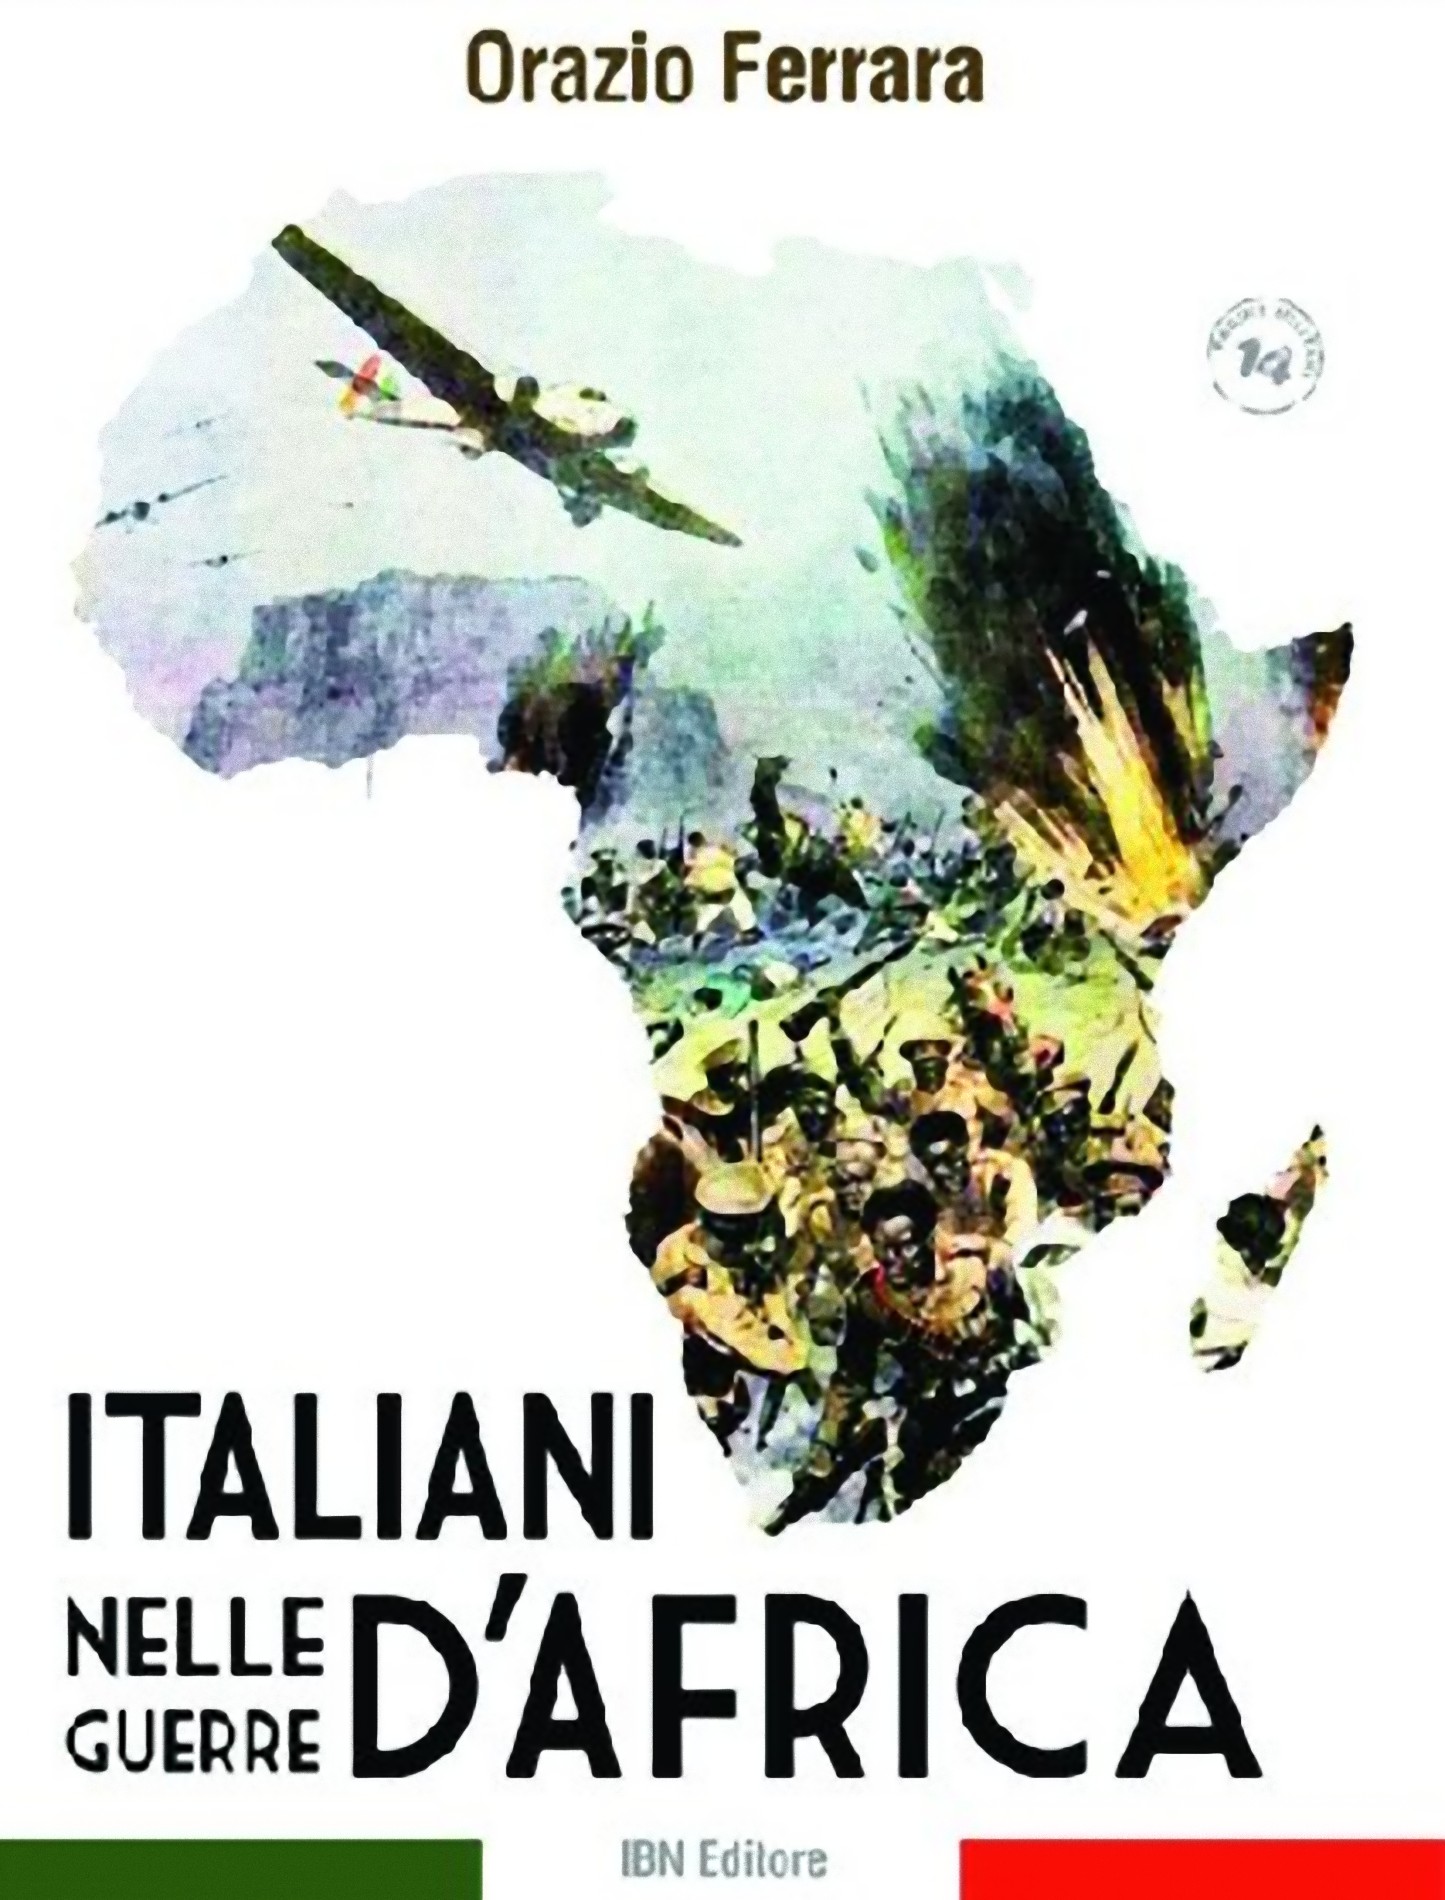  Libri da leggere: &quot;Italiani nelle guerre d’Africa&quot;